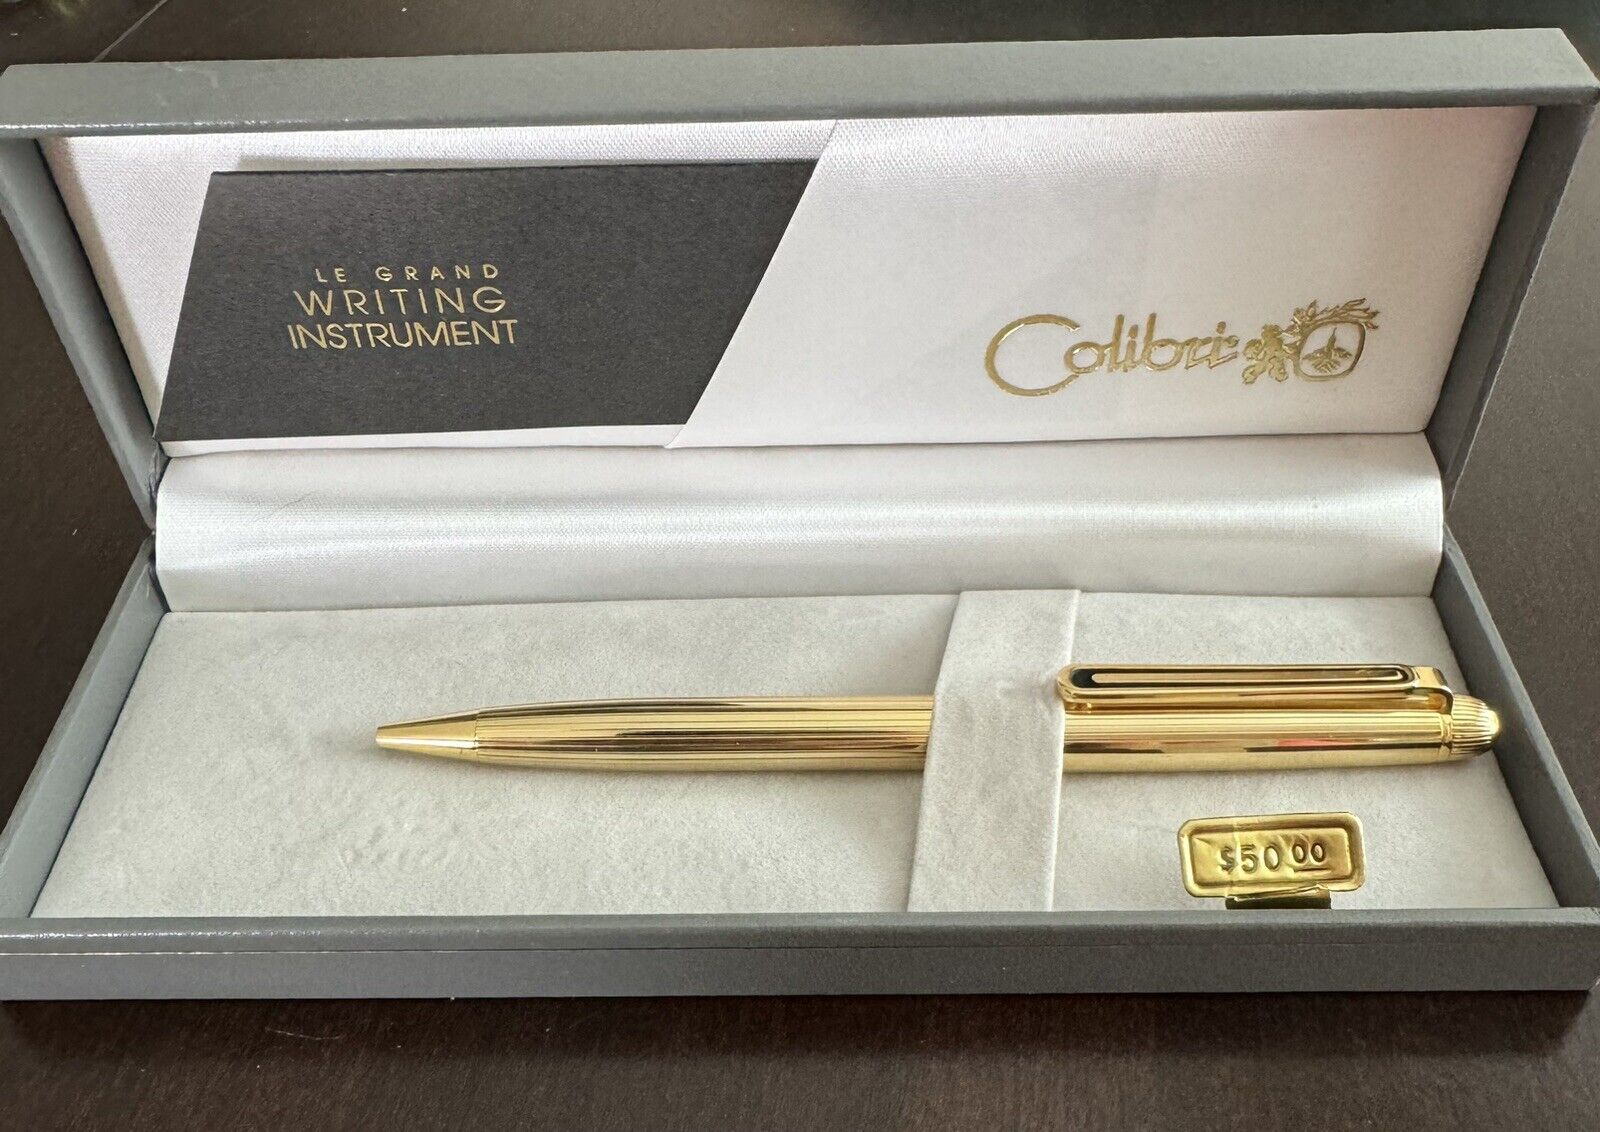 Colibri Pen Gold Color LE GRAND (writes), In Gray Box. Made In Japan